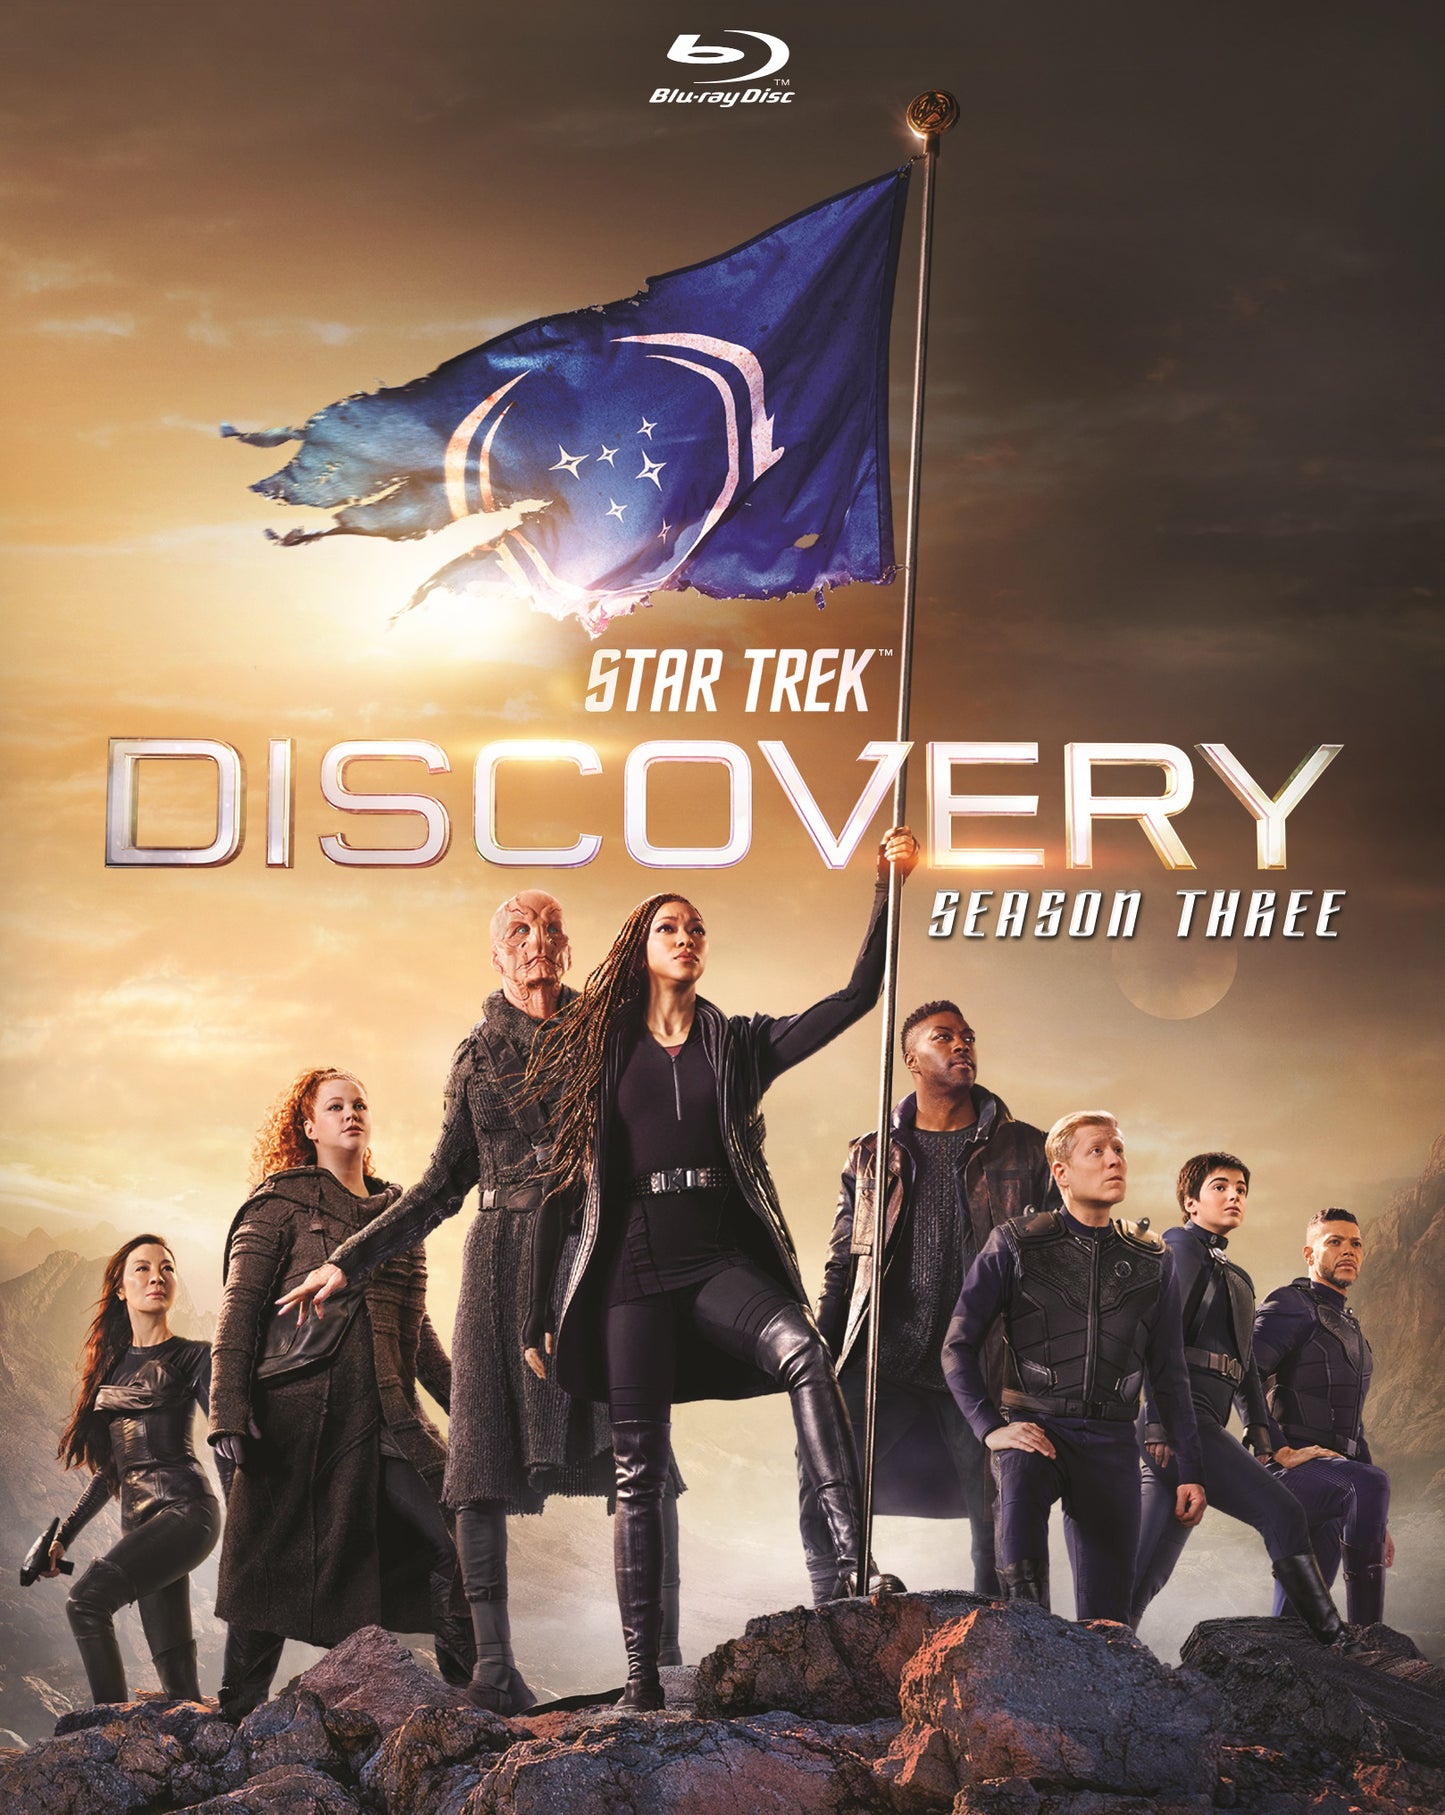 Star Trek: Discovery - Season Three [Blu-ray] cover art